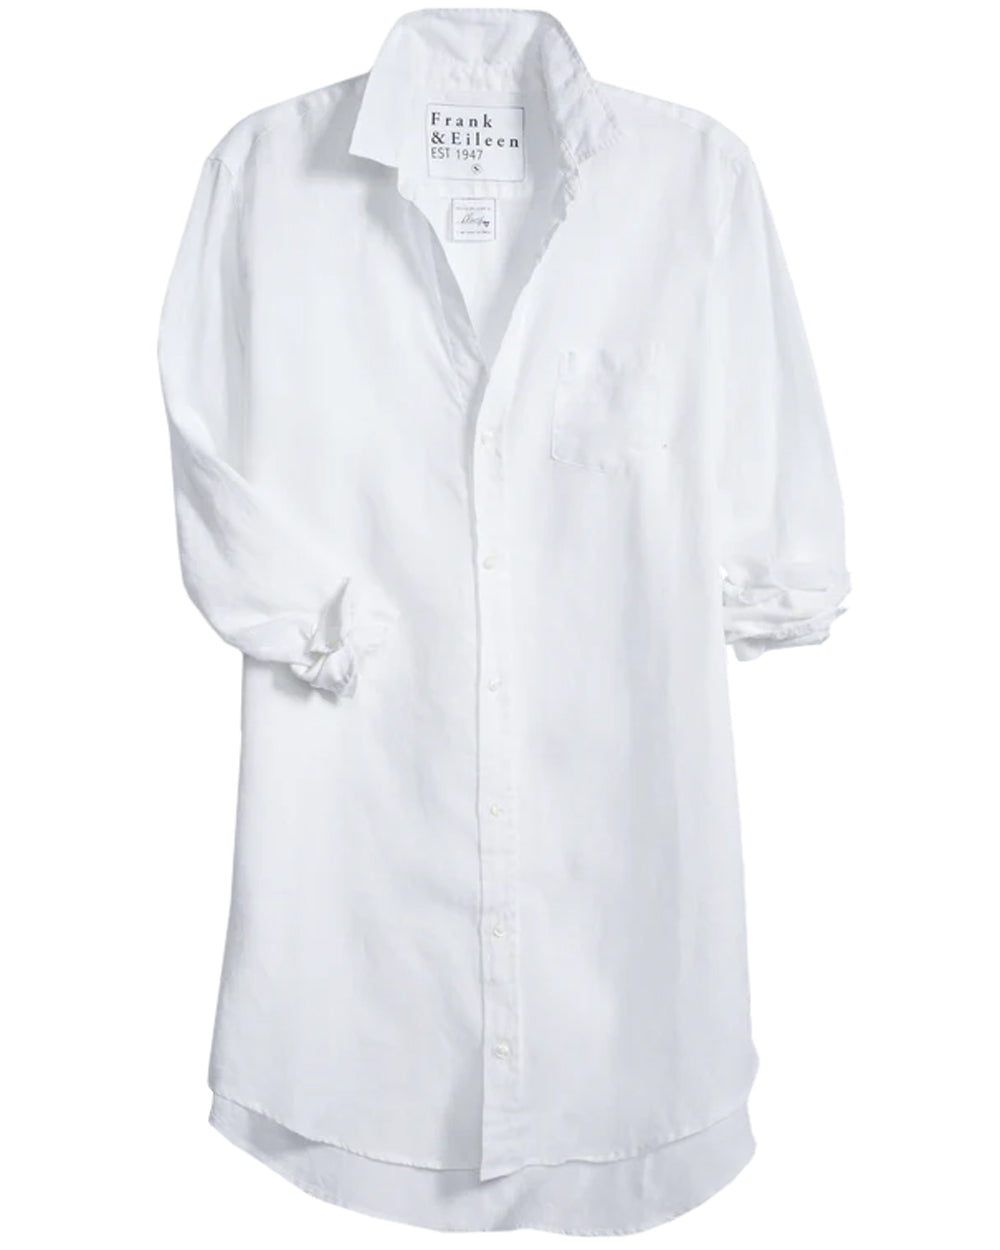 White Linen Mary Shirt Dress